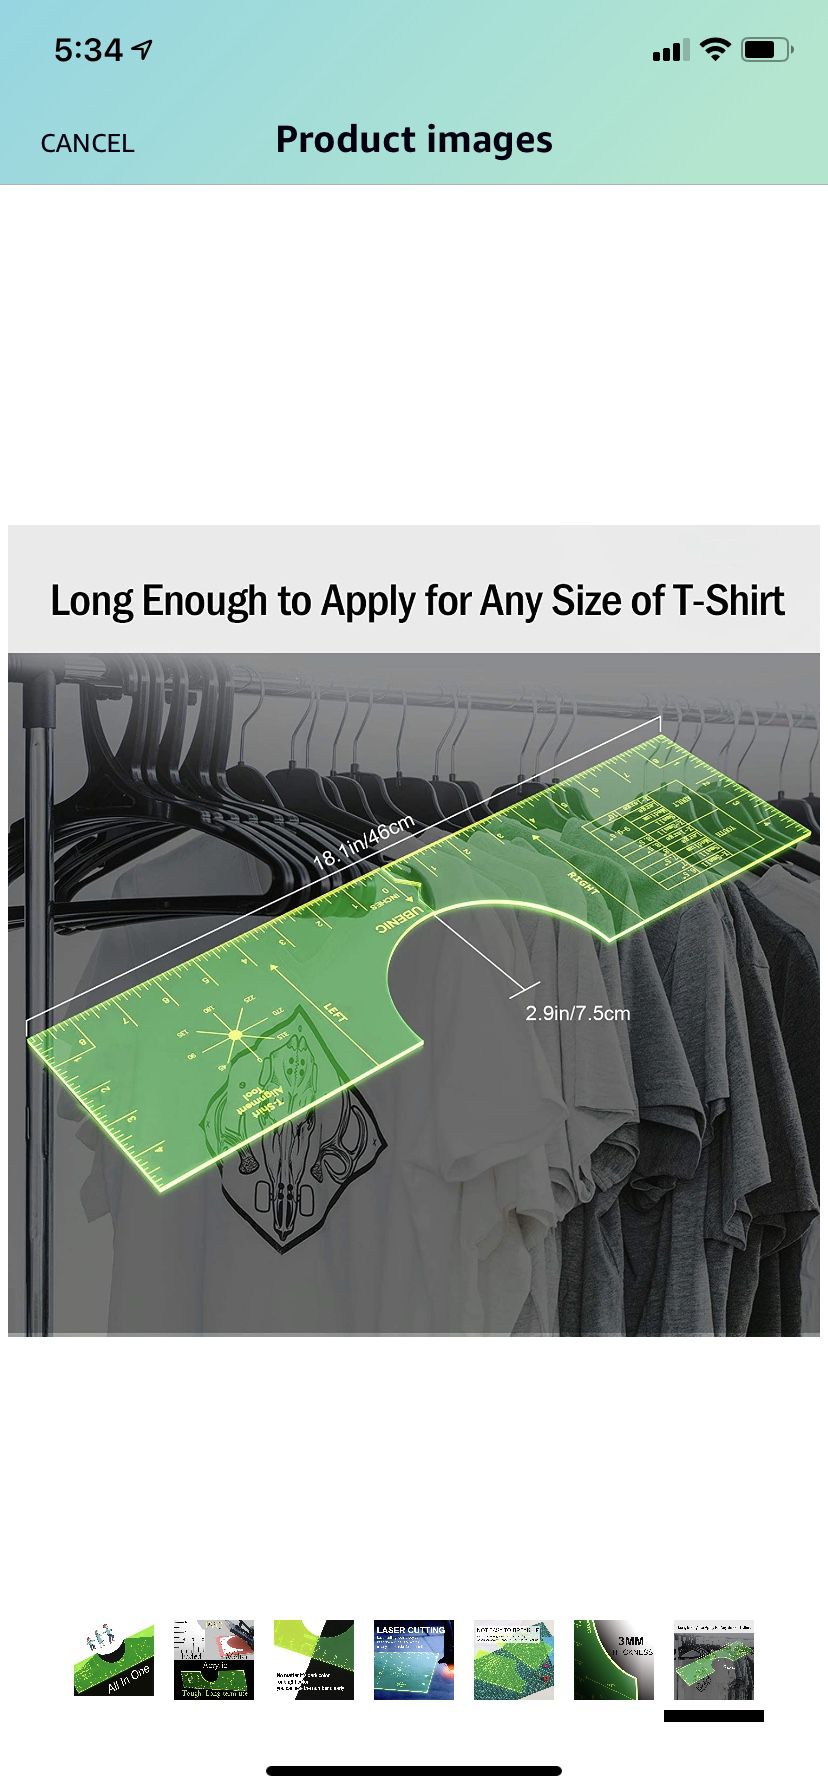 Tshirt Ruler Guide, T Shirt Alignment Tool, Laser T Shirt Ruler to